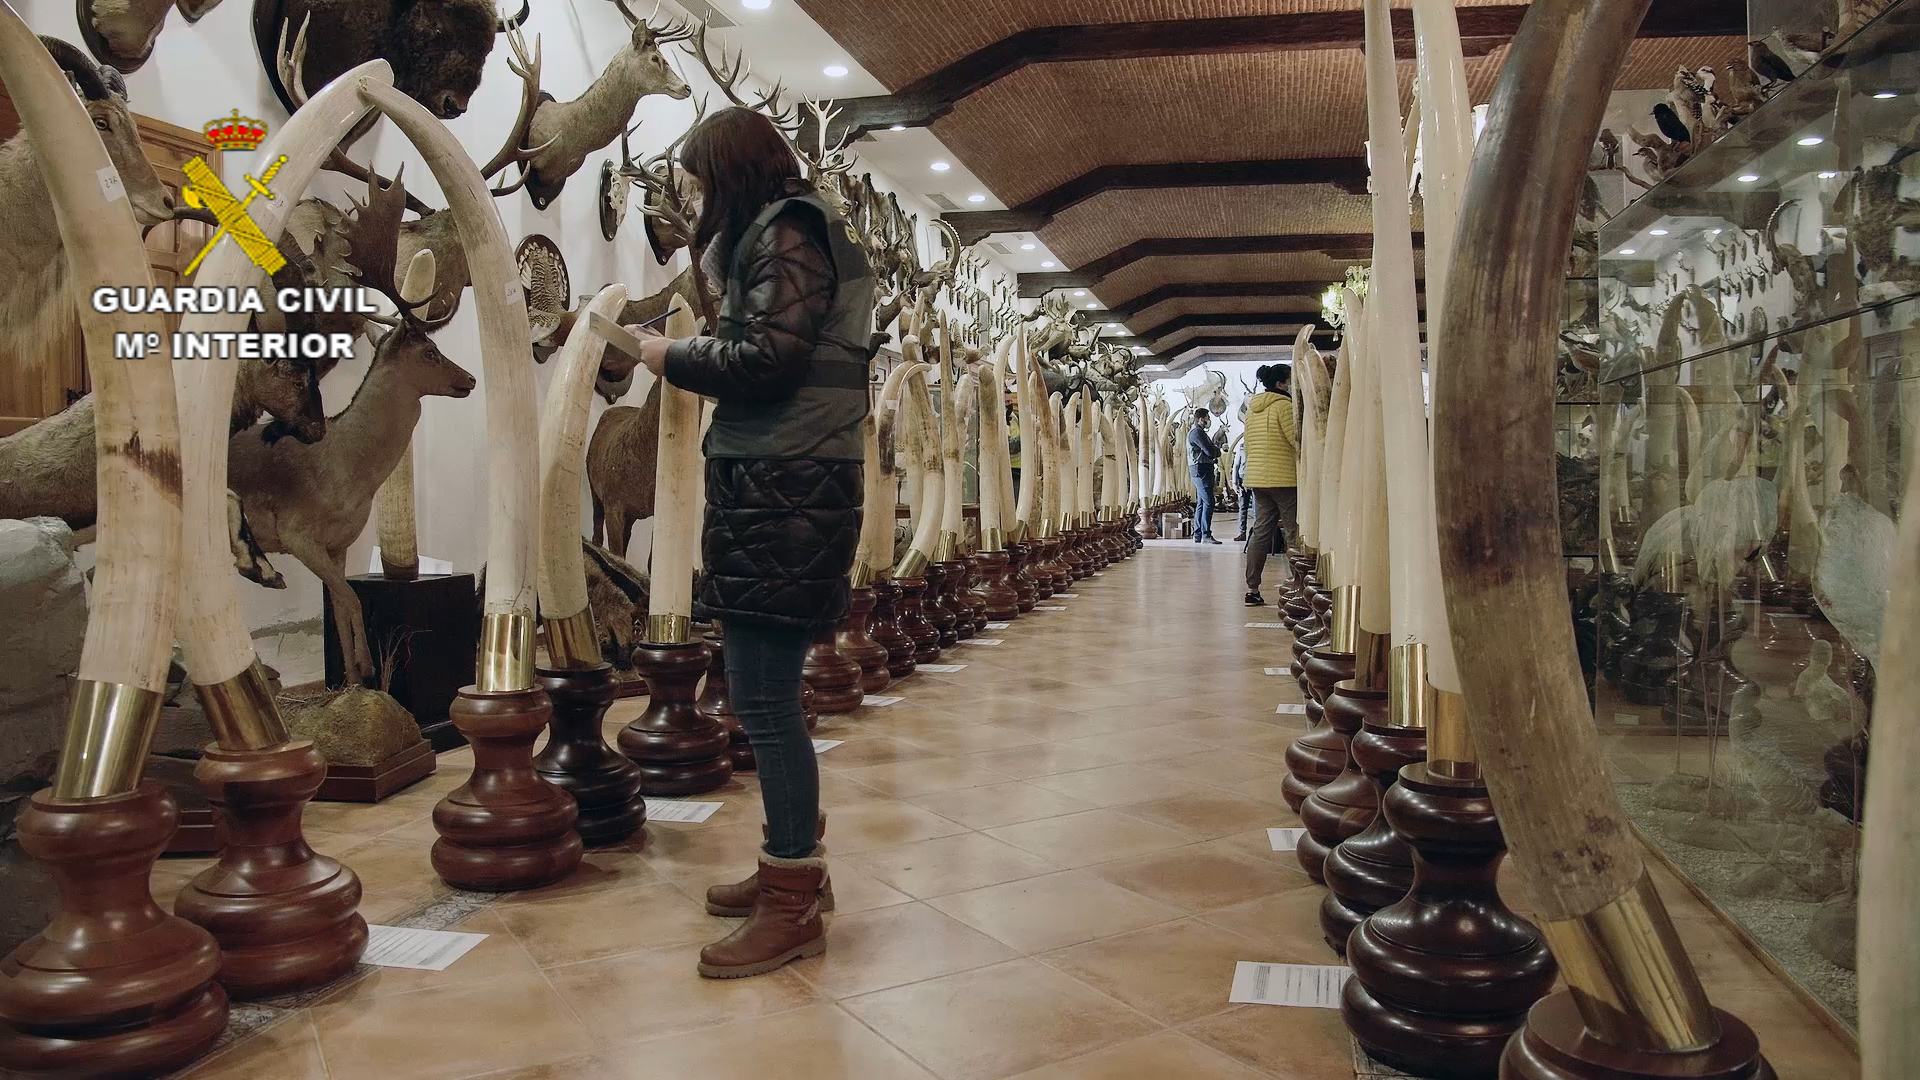 A row of ornate ivory tusks on display.